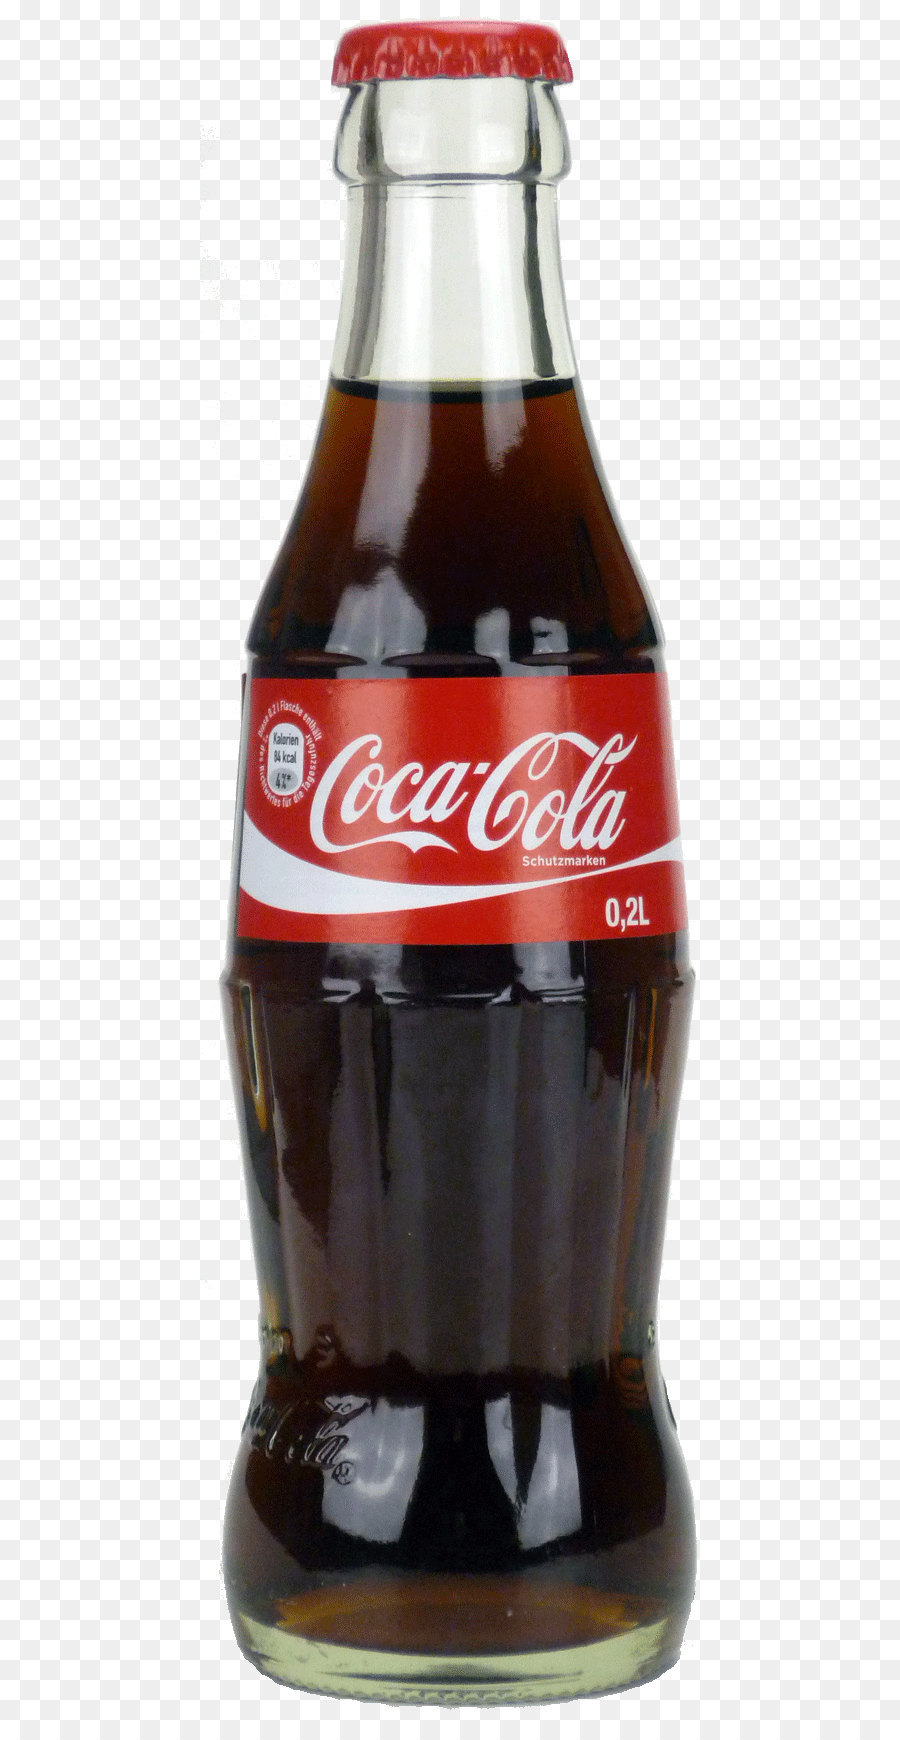 Coca-Cola Soft drink Clip art - Coca Cola bottle PNG image png download - 500*1723 - Free Transparent Coca Cola png Download.